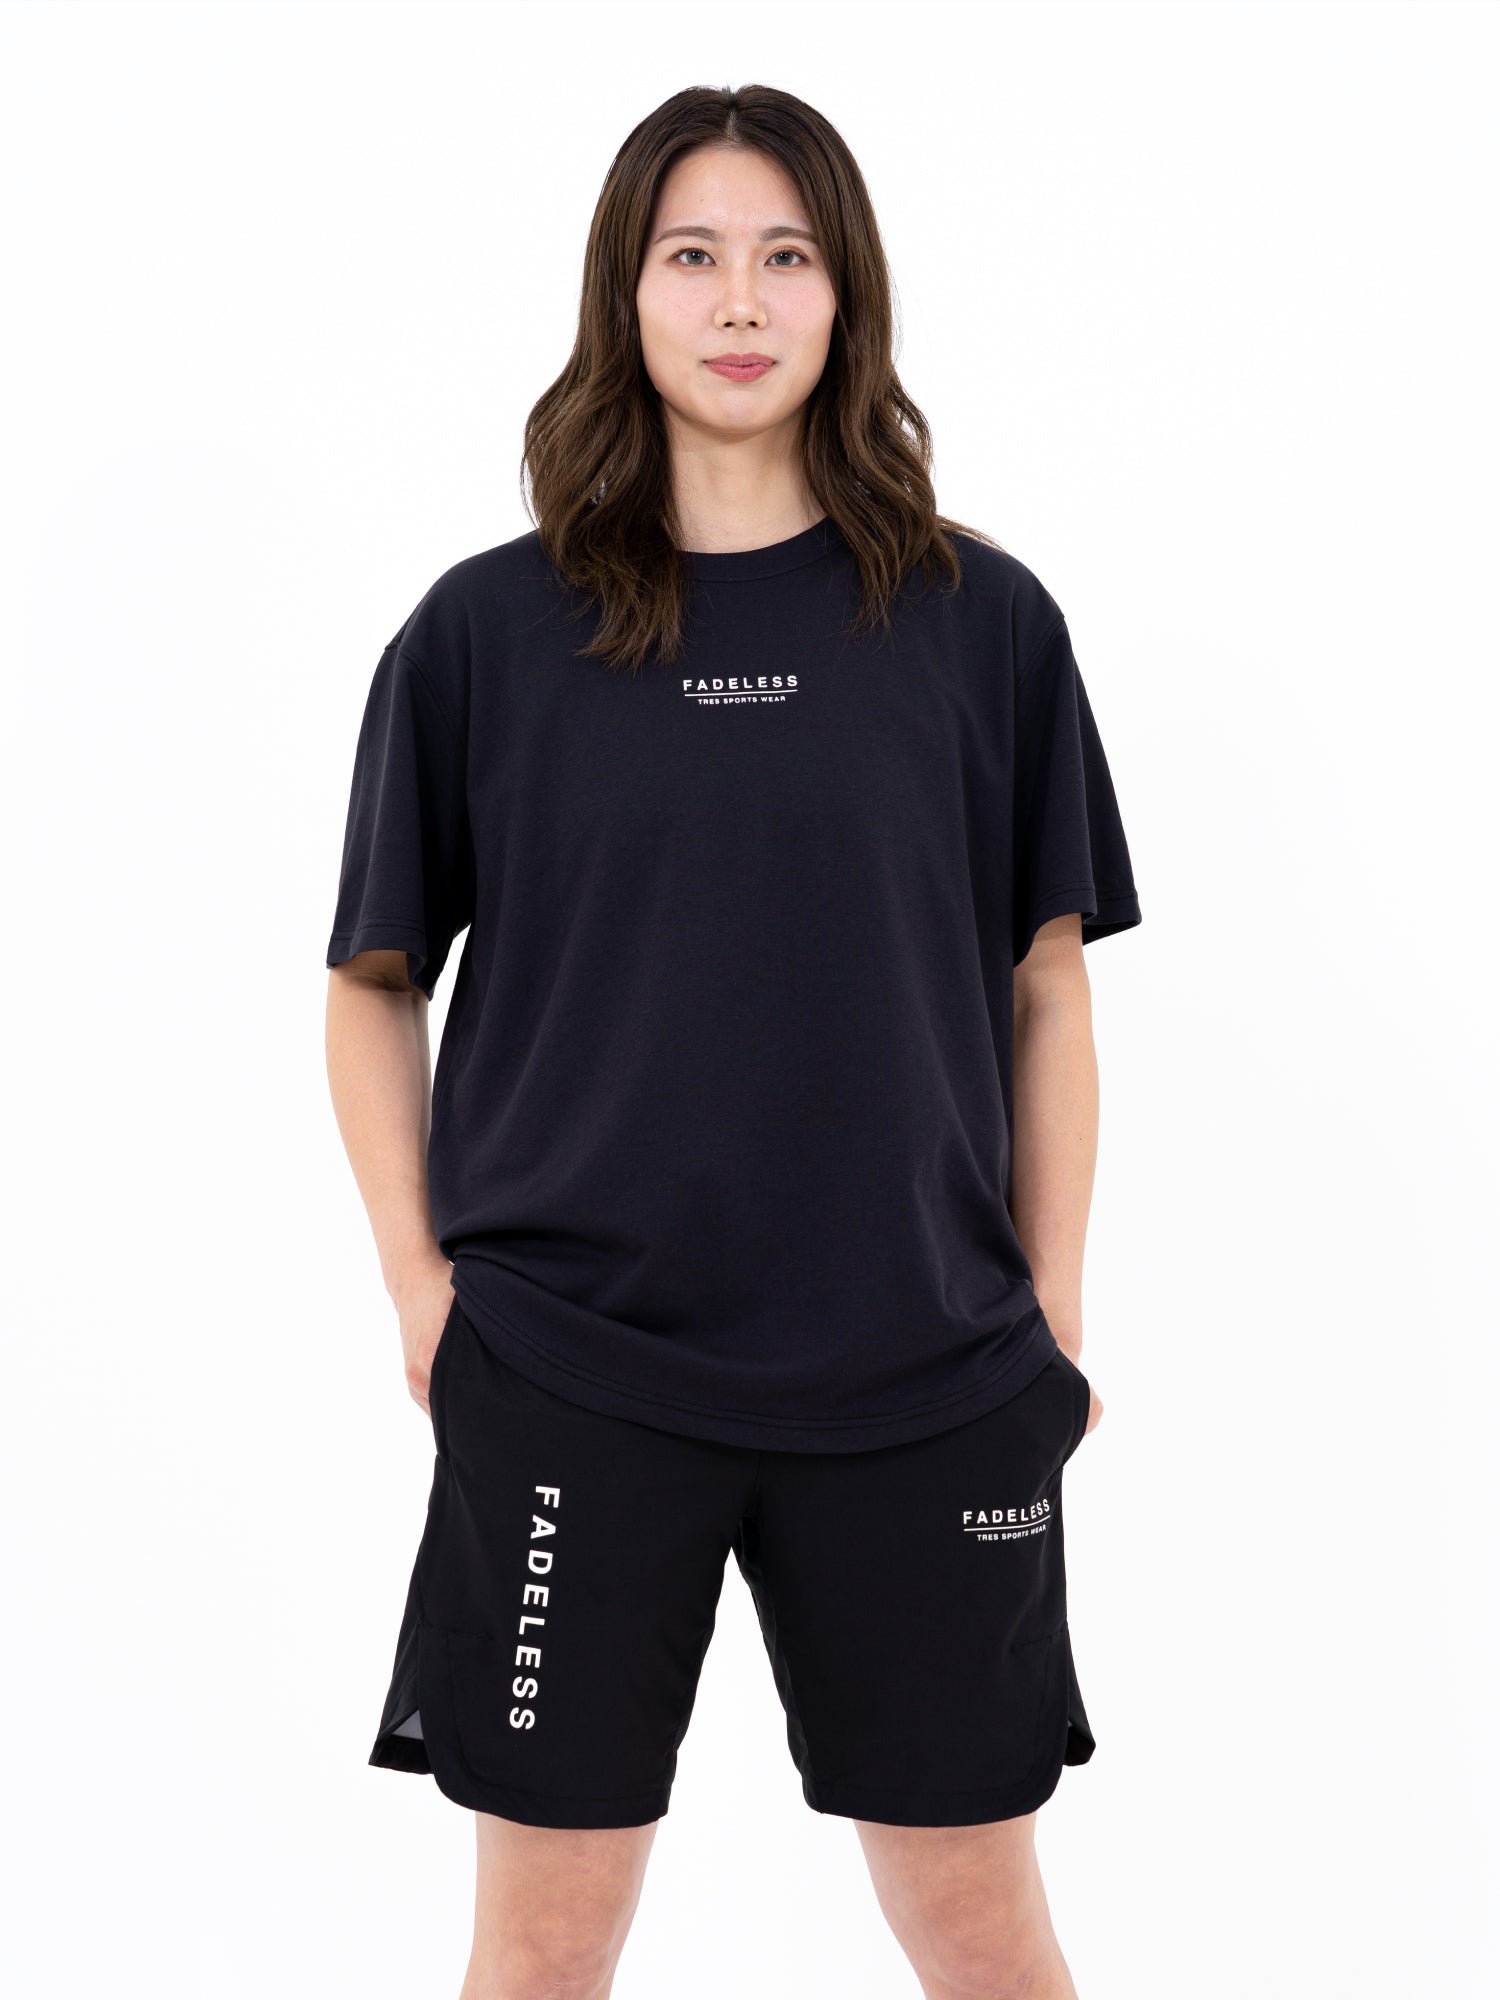 【FADELESS】T-shirts(Black)